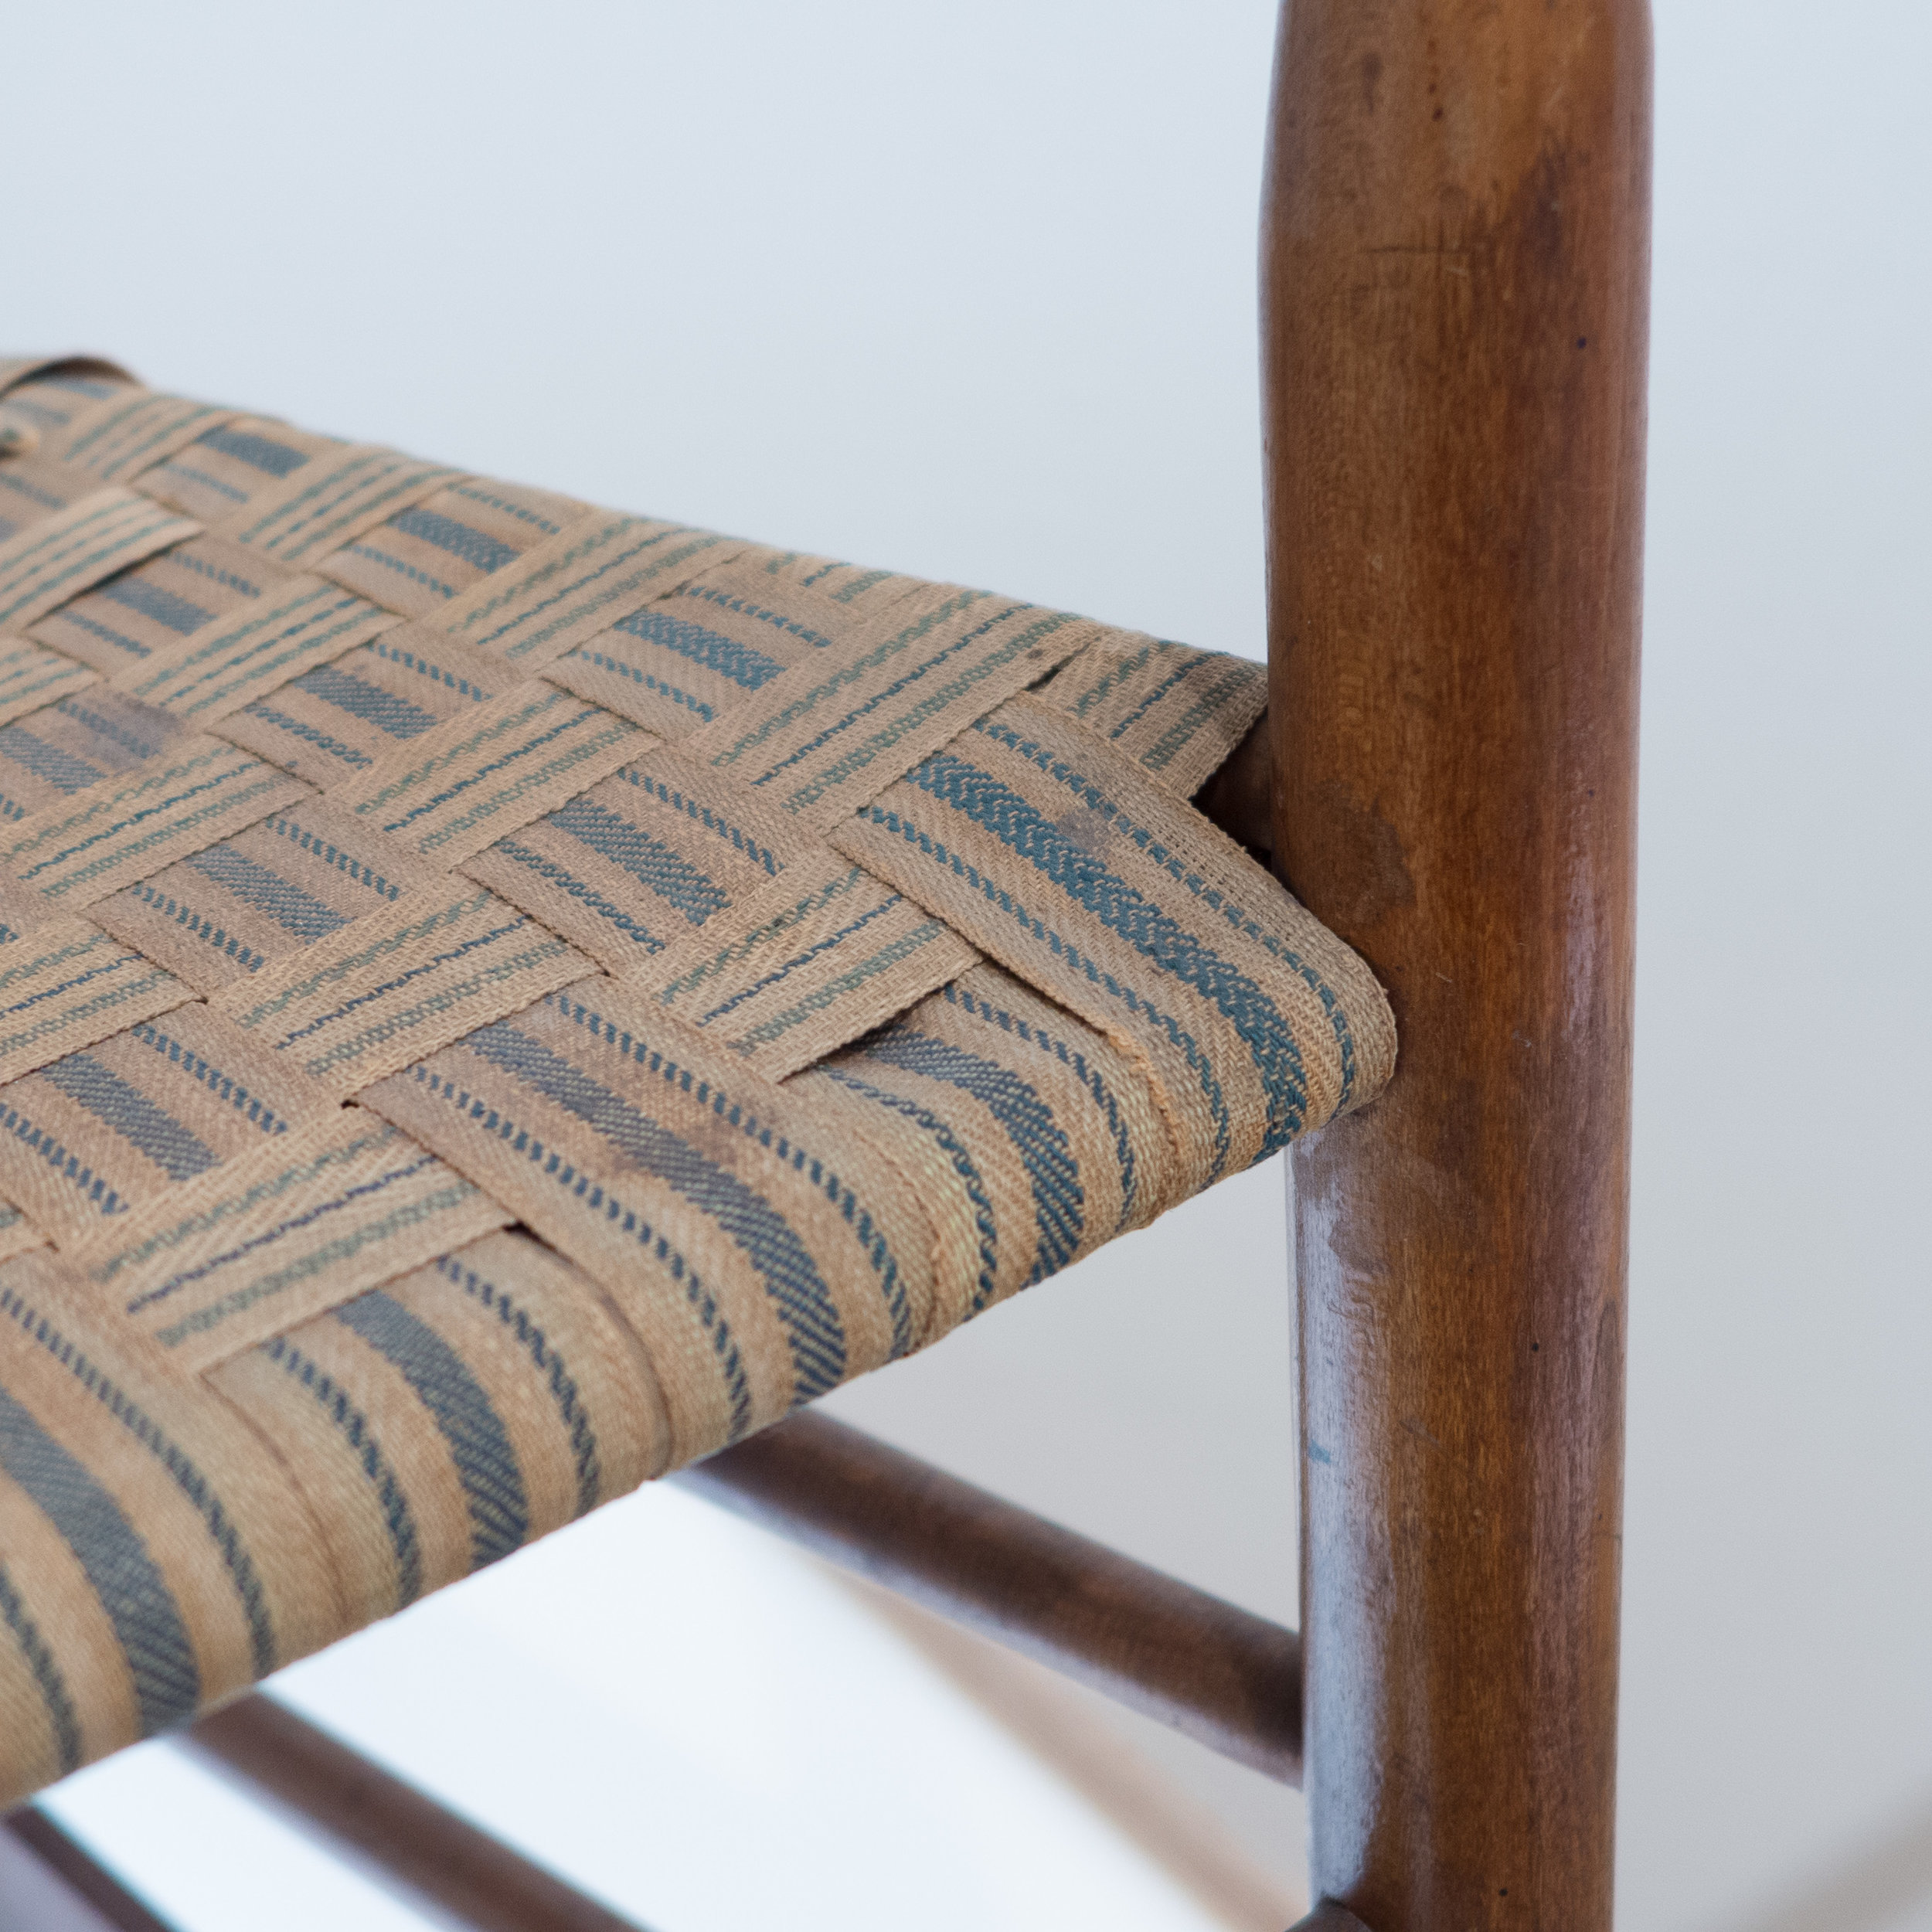 Alvar Aalto Chairs Context Danish Design Review